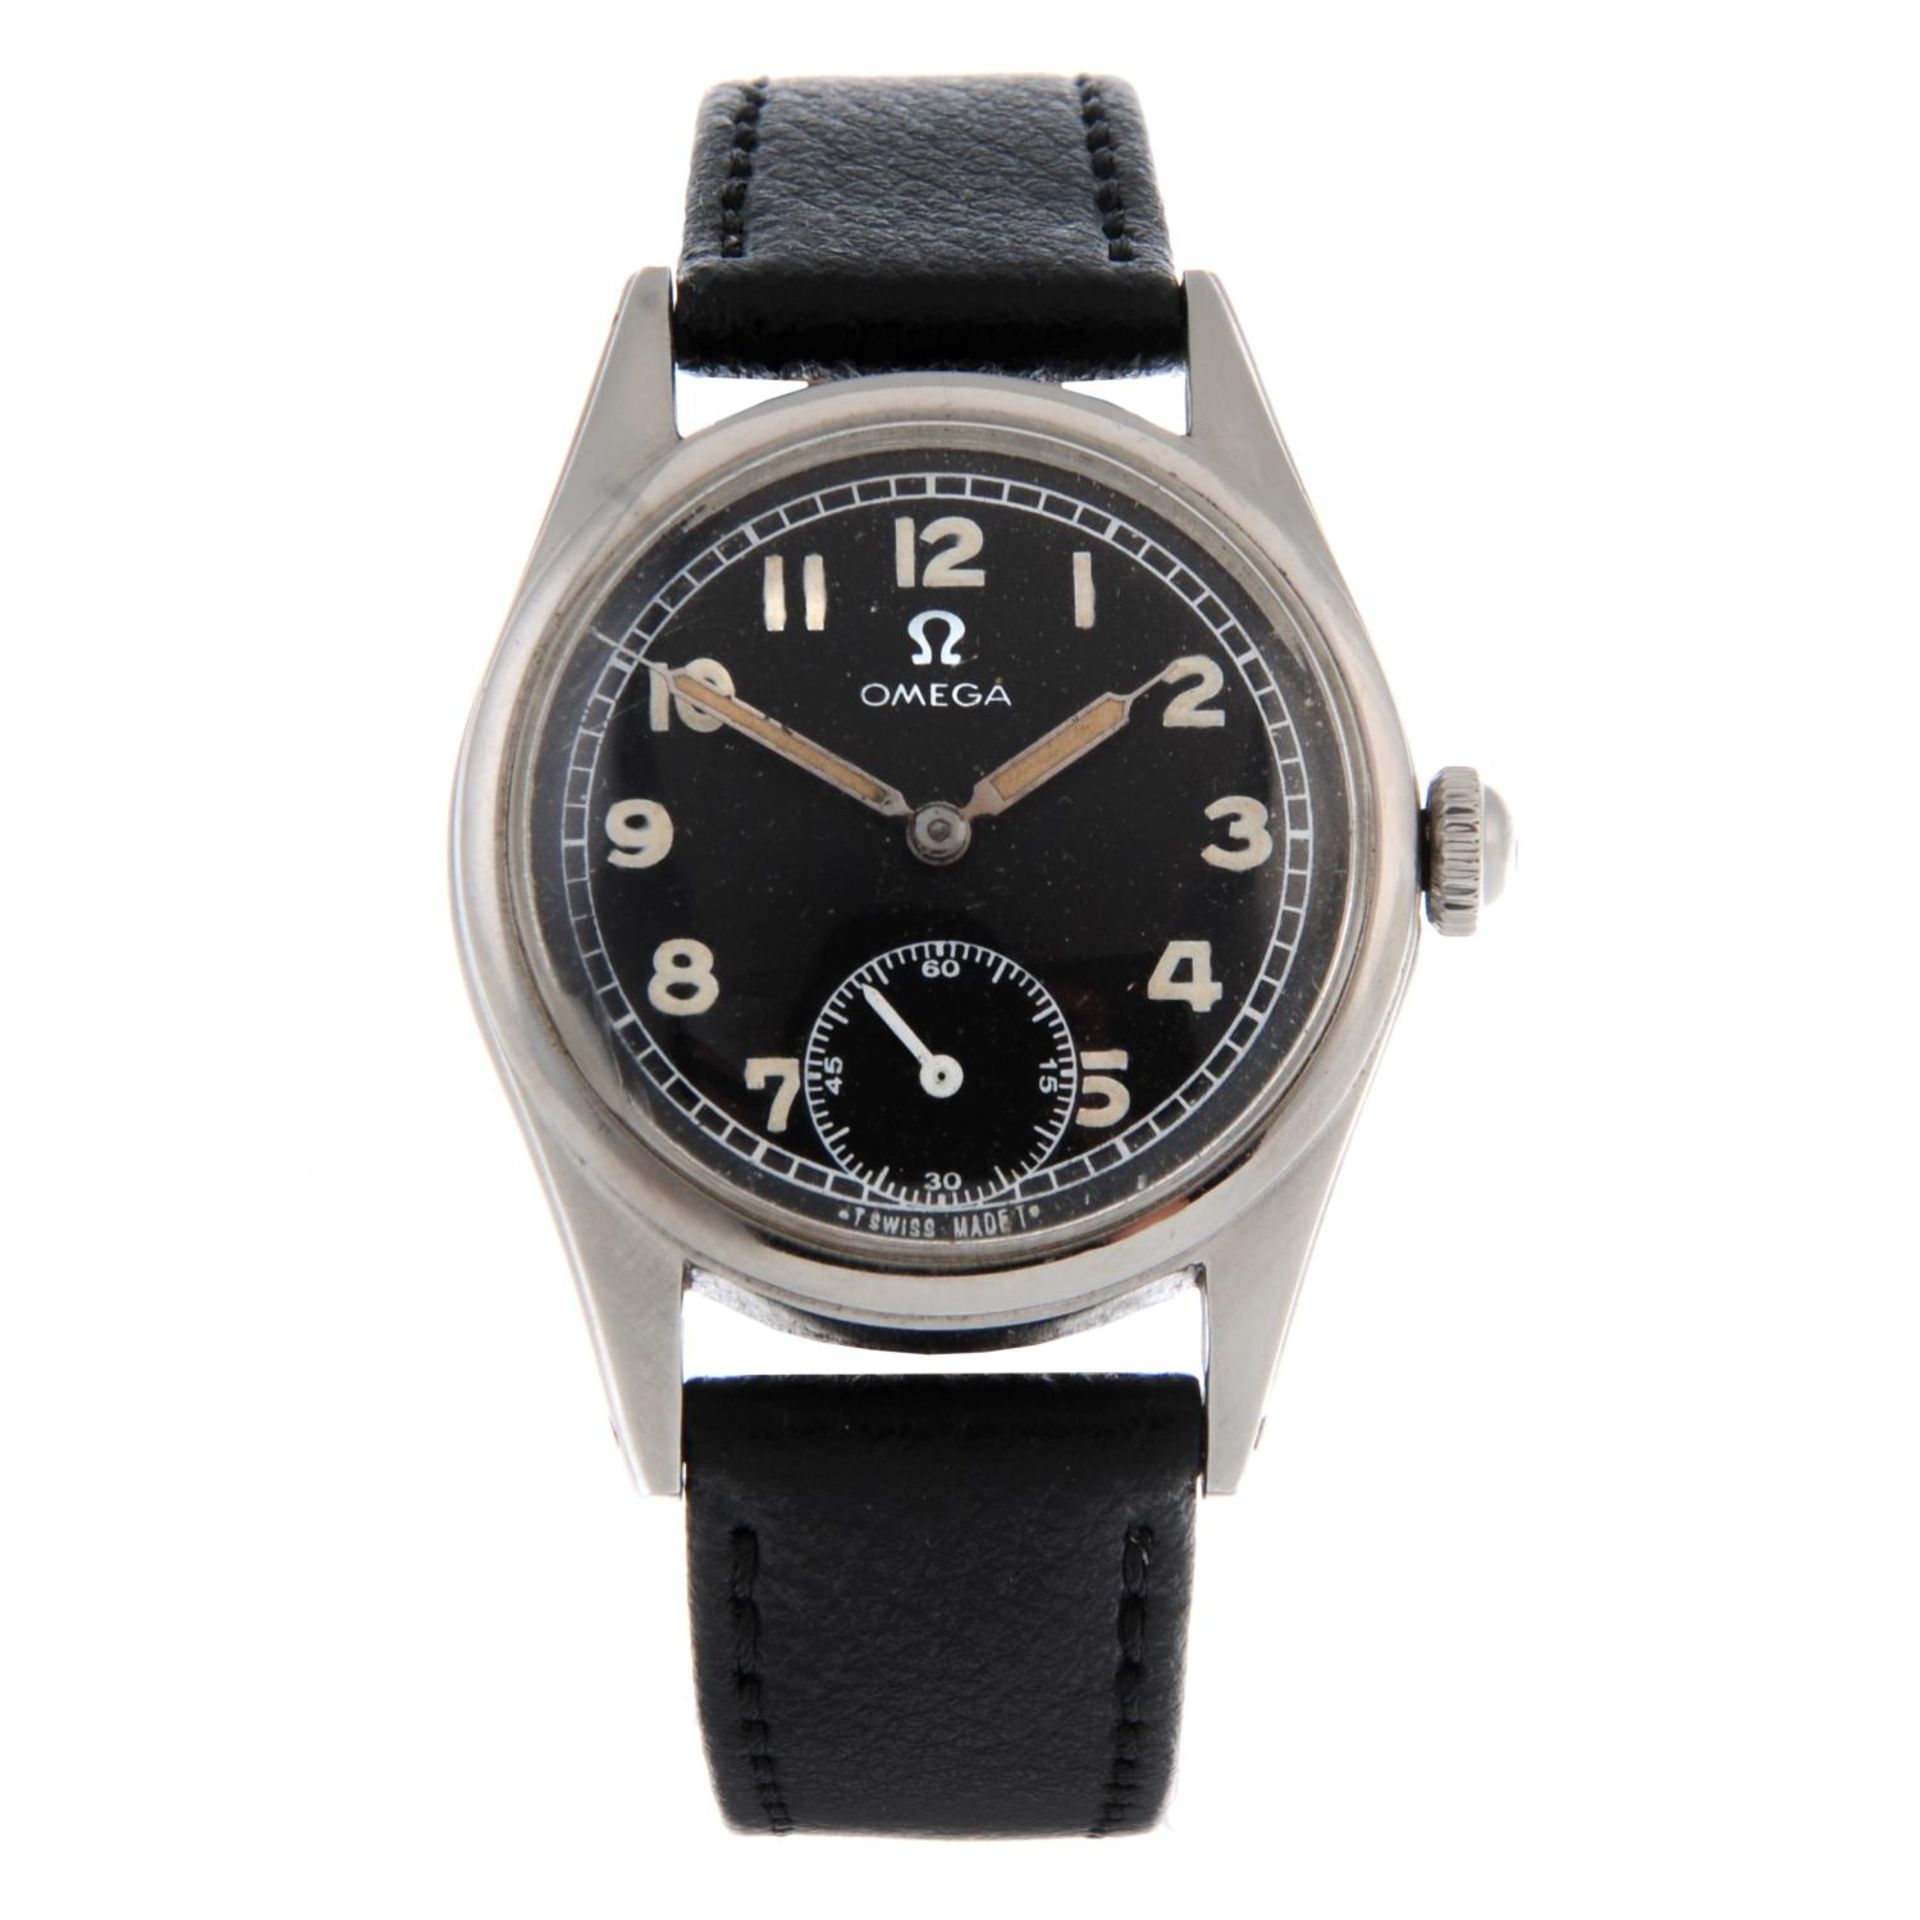 OMEGA - a wrist watch.